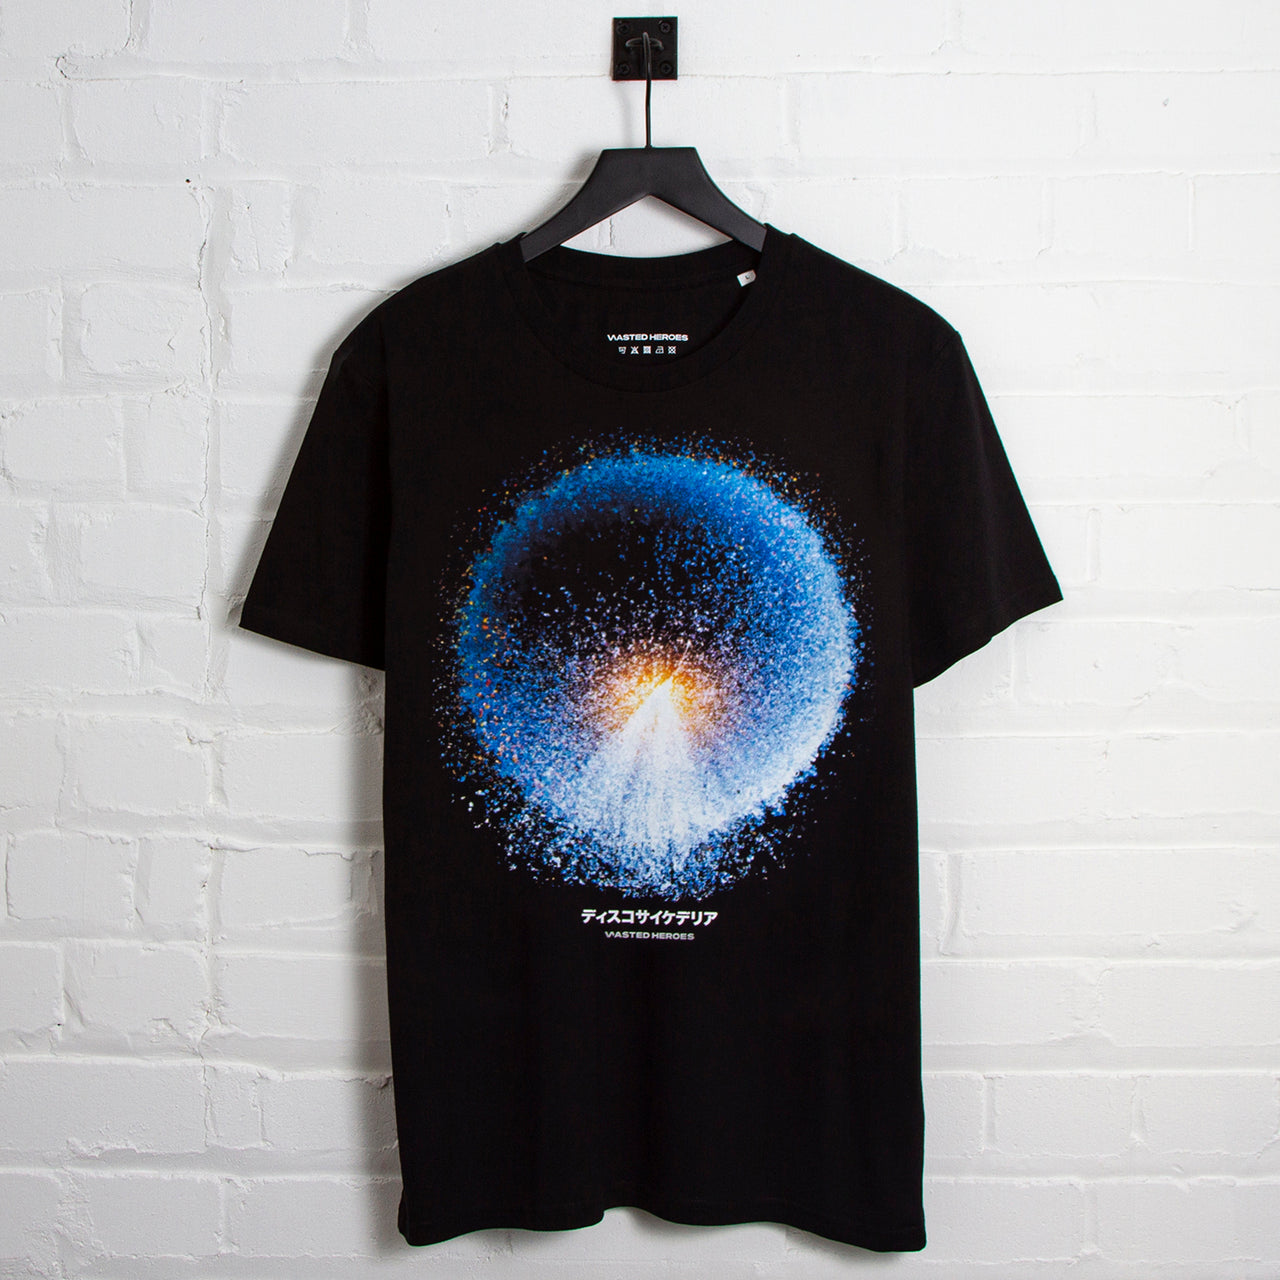 022 Disco Psychedelia Front Print - Tshirt - Black